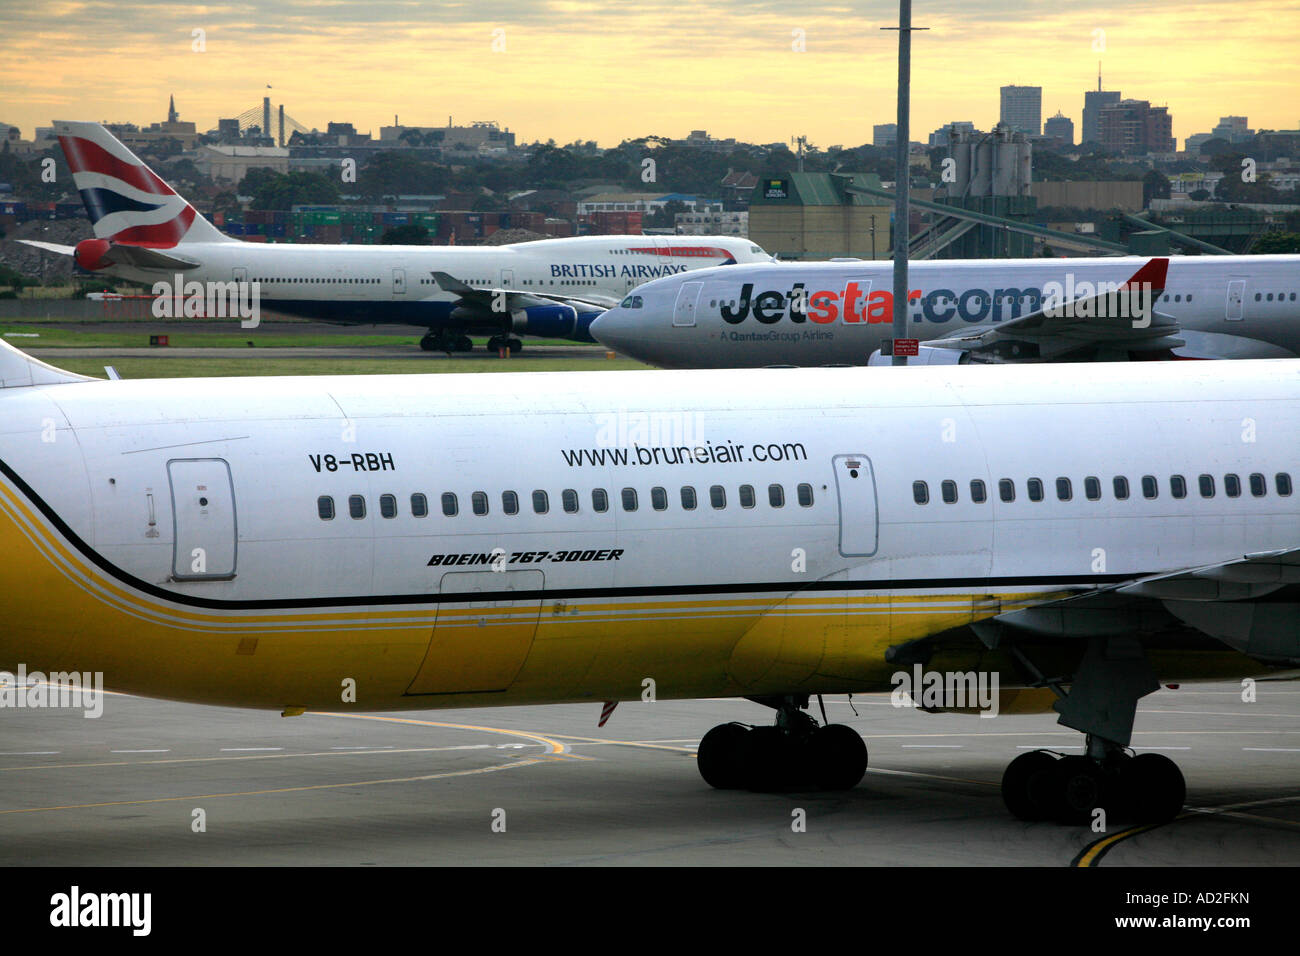 British Airways nazionale australiana Jetstar carrier e Brunei Air Passenger jet line-up di decollare in Sydney Aeroporto mascotte Foto Stock